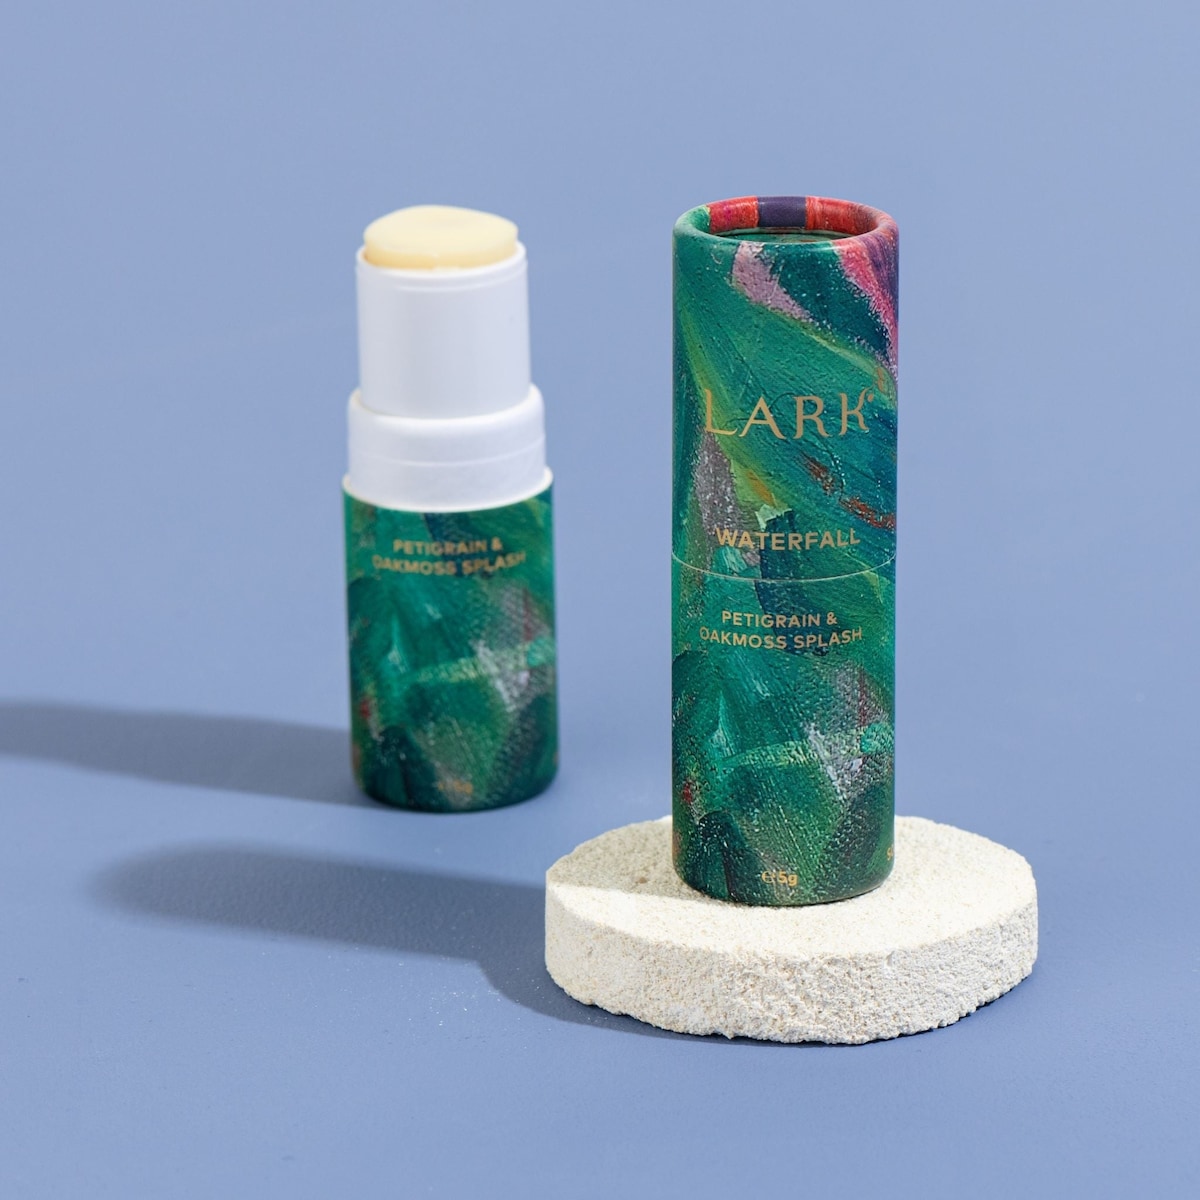 Lark Solid Perfume Waterfall 5g